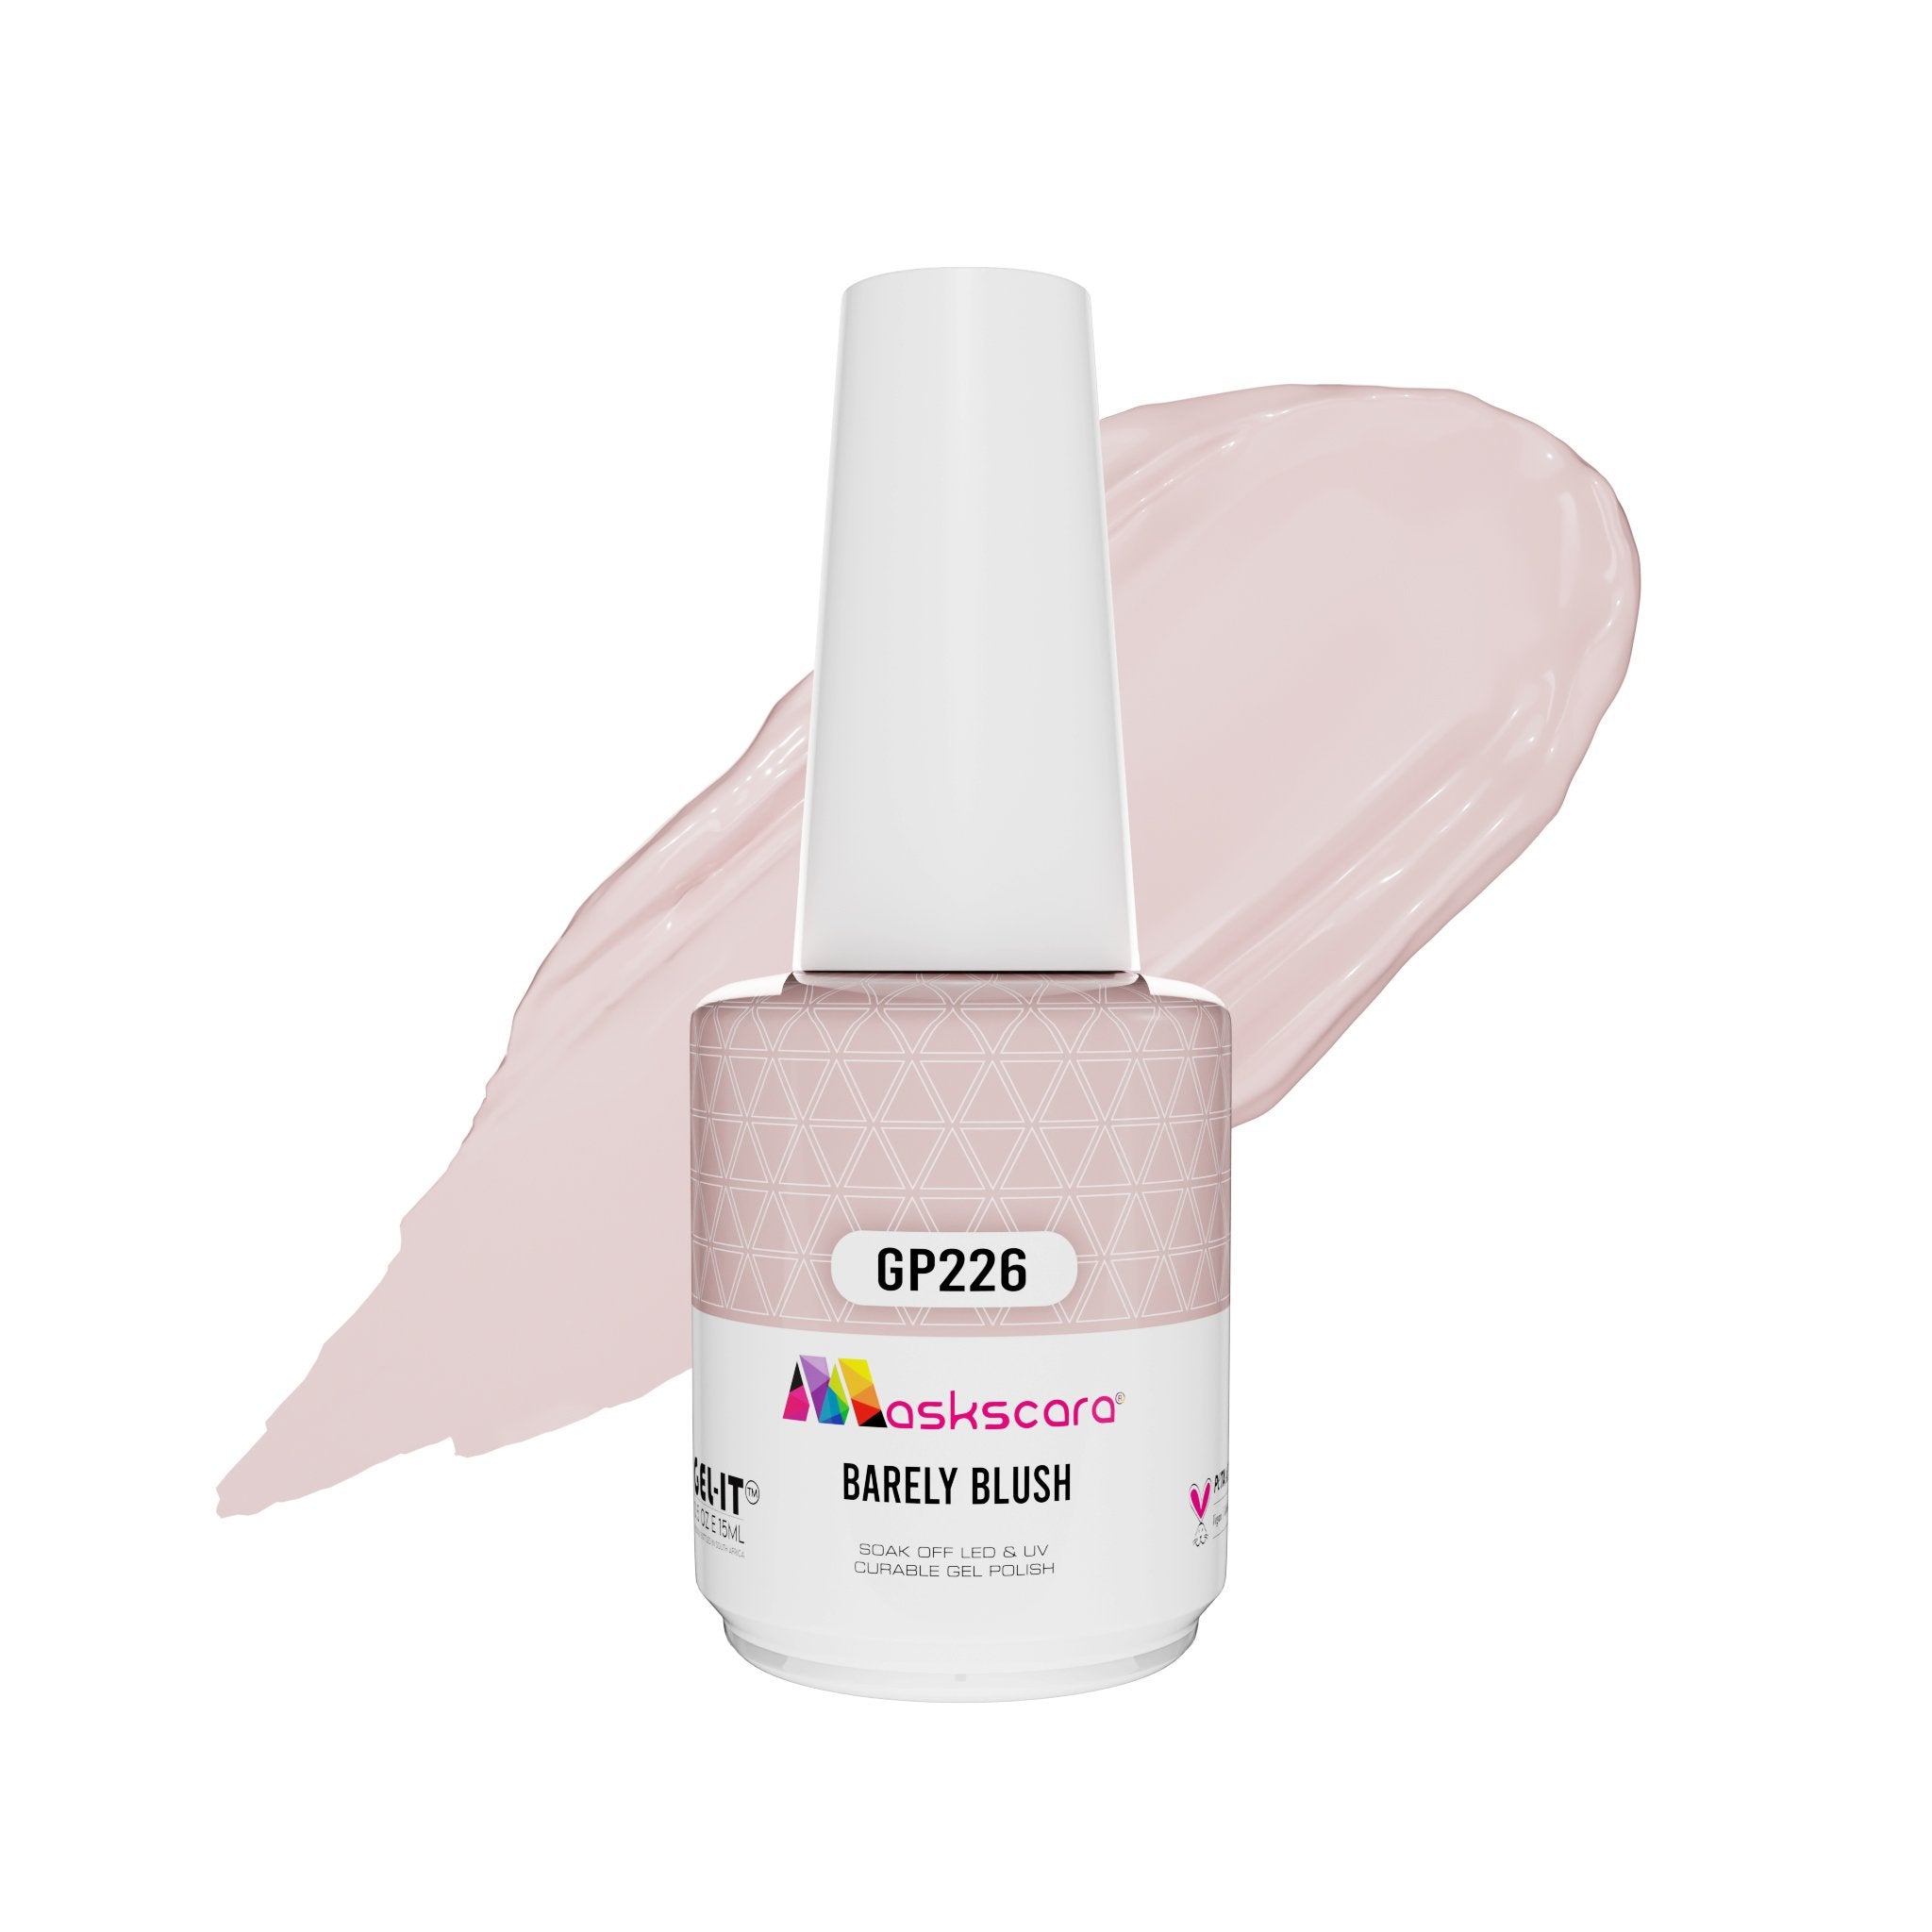 <img scr = “ GP226 Barely Blush.jpeg” alt = “Nude Pink gel polish colour by the brand Maskscara”>